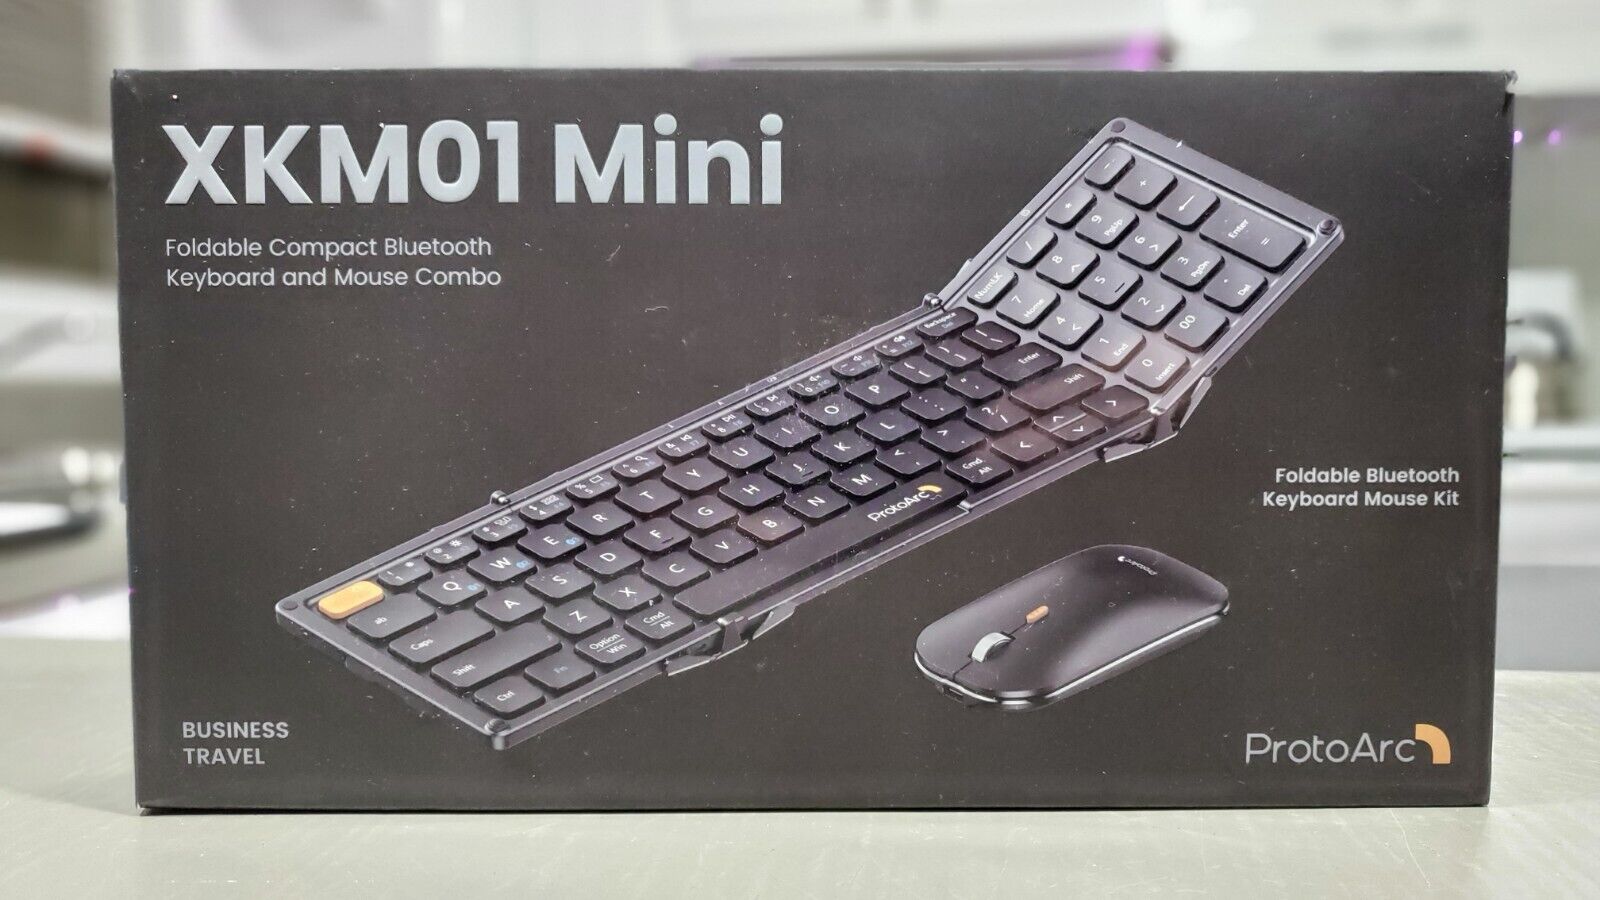 ProtoArc Foldable Compact Keyboard and Mouse XKM01 Mini Foldable Portable New